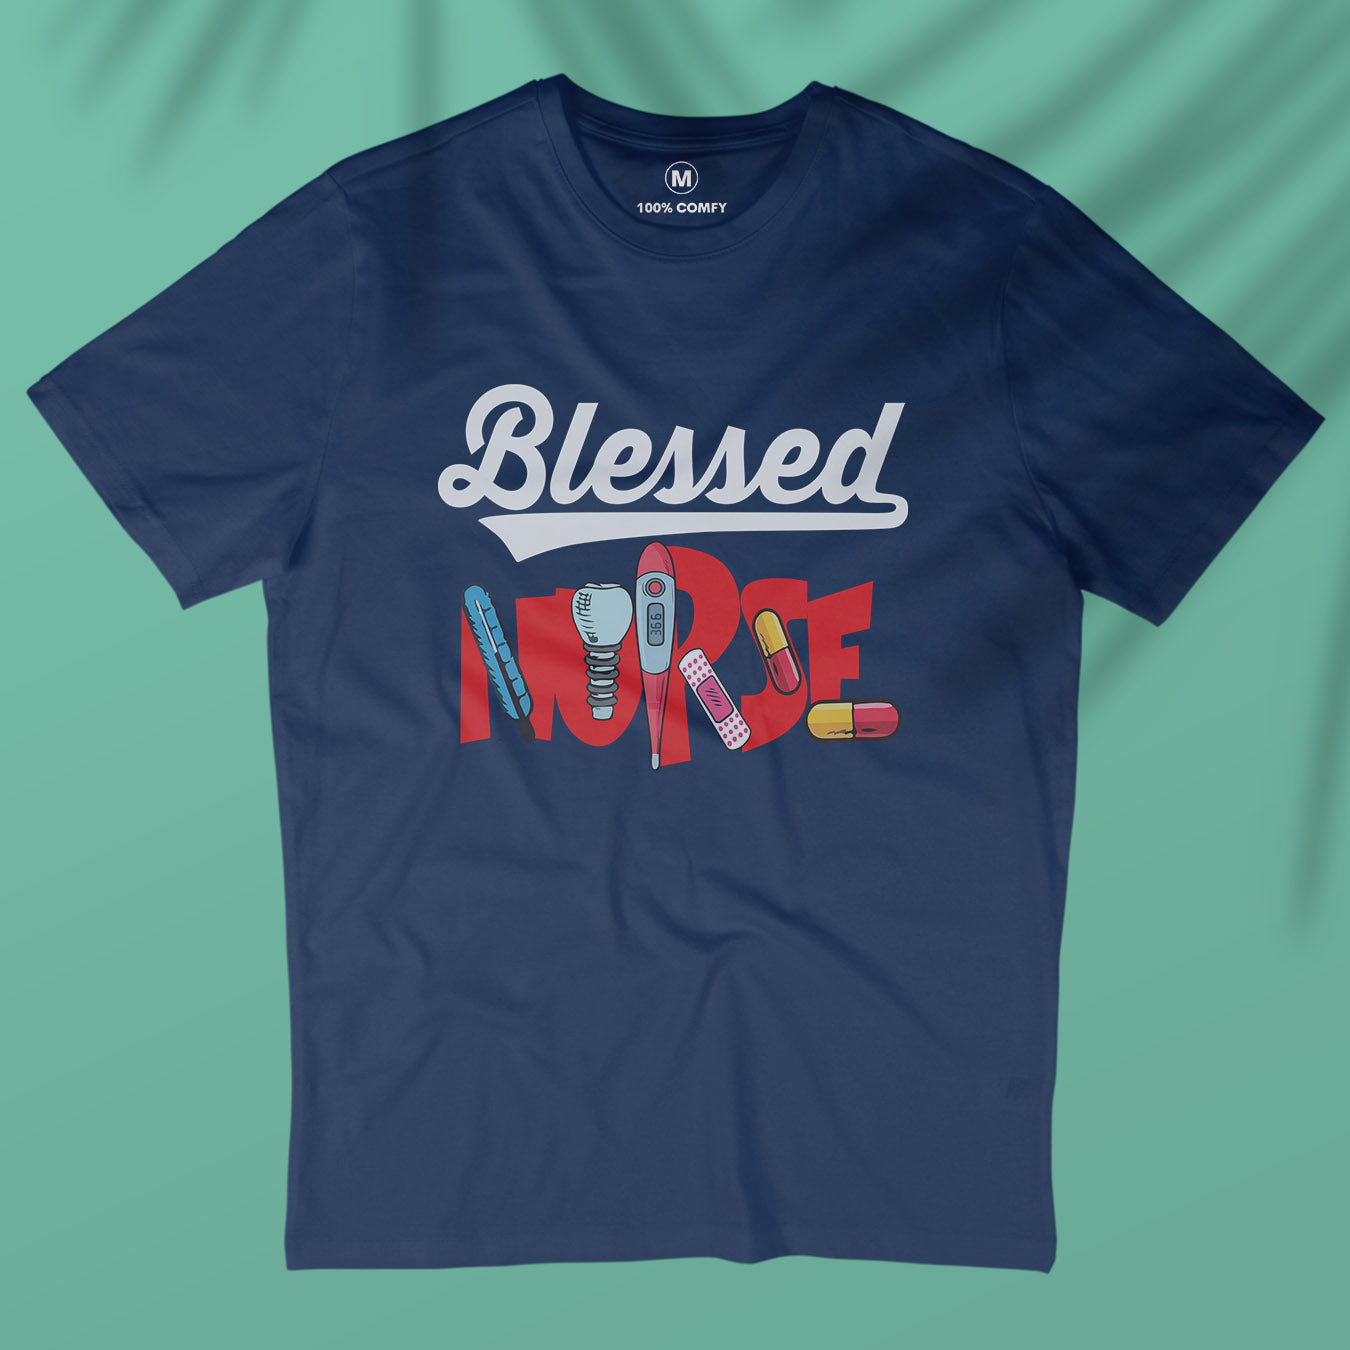 Blessed Nurse - Men T-shirt